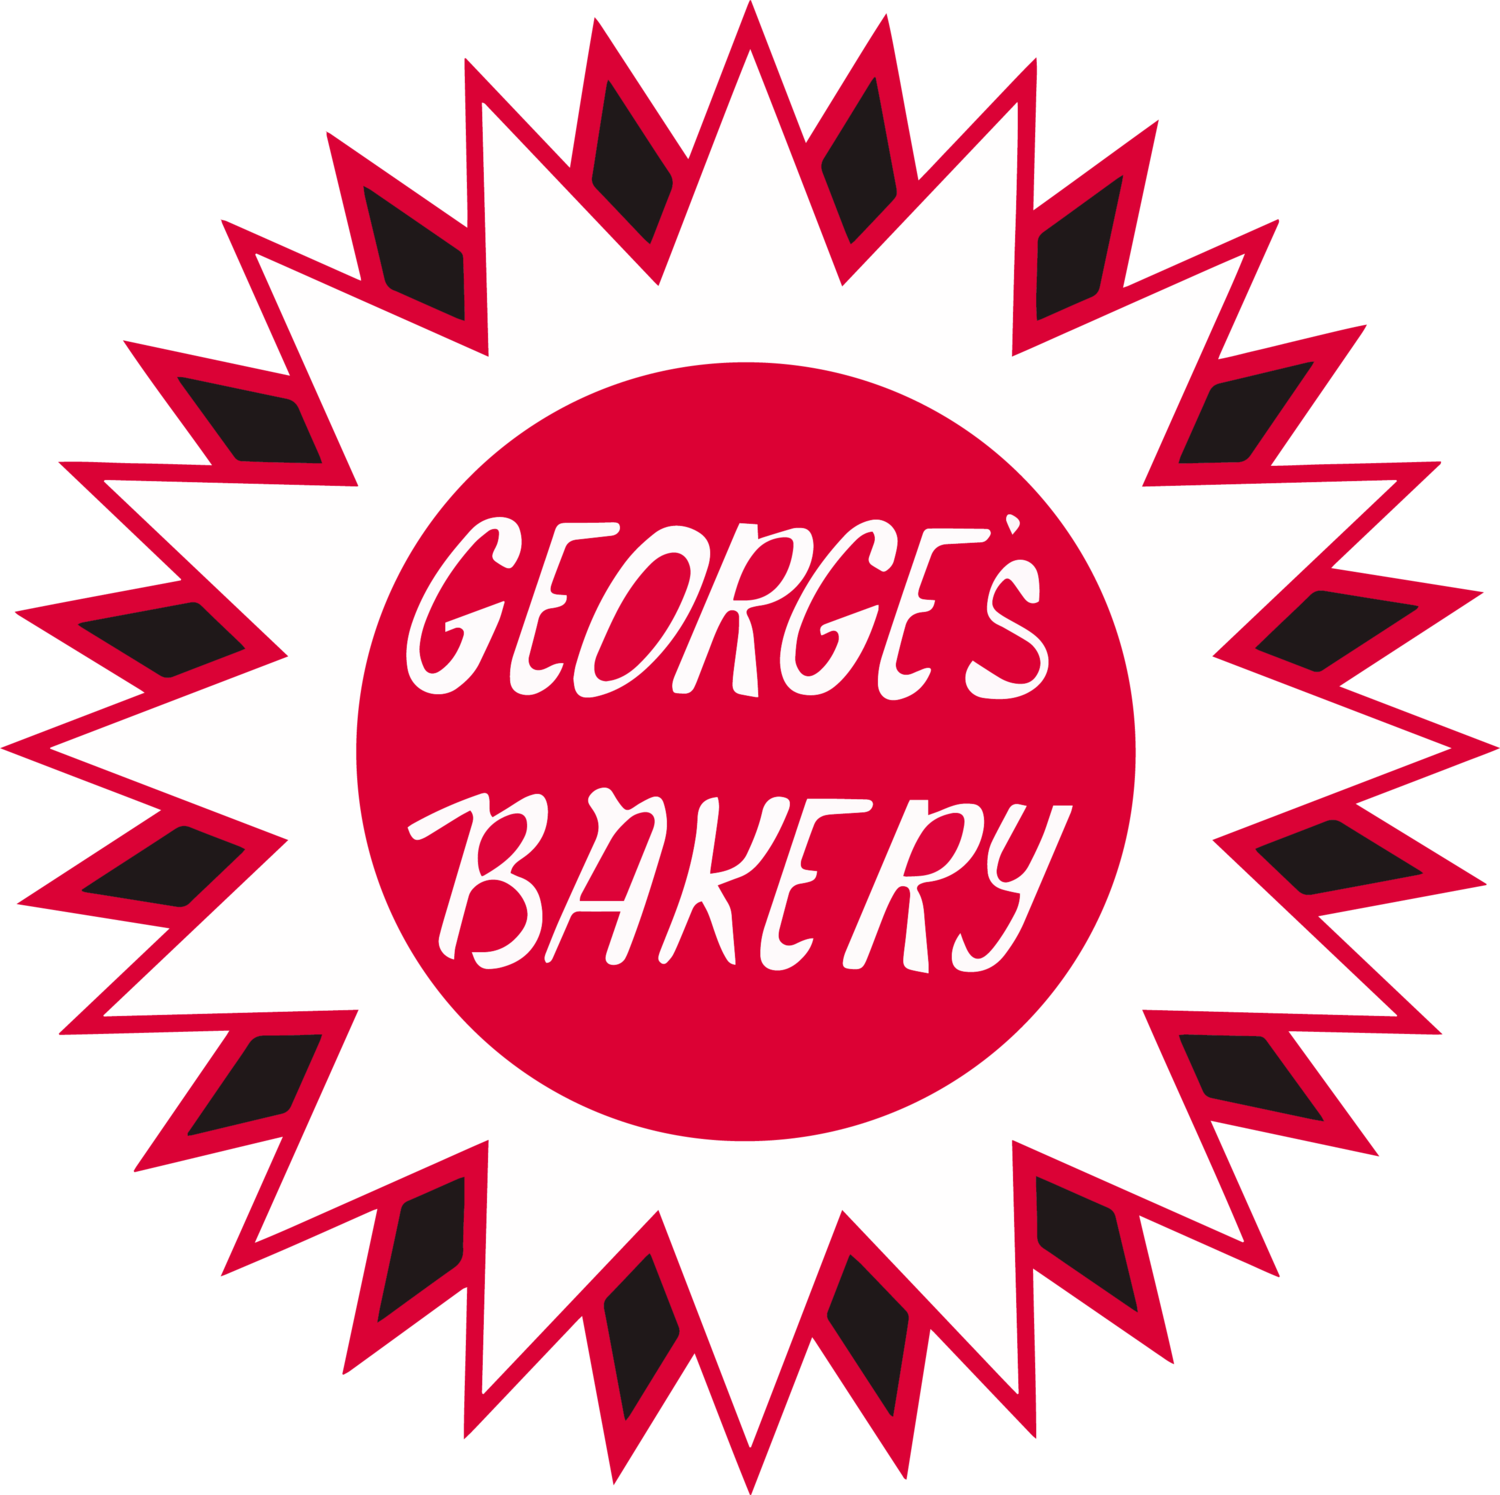 George's Bakery